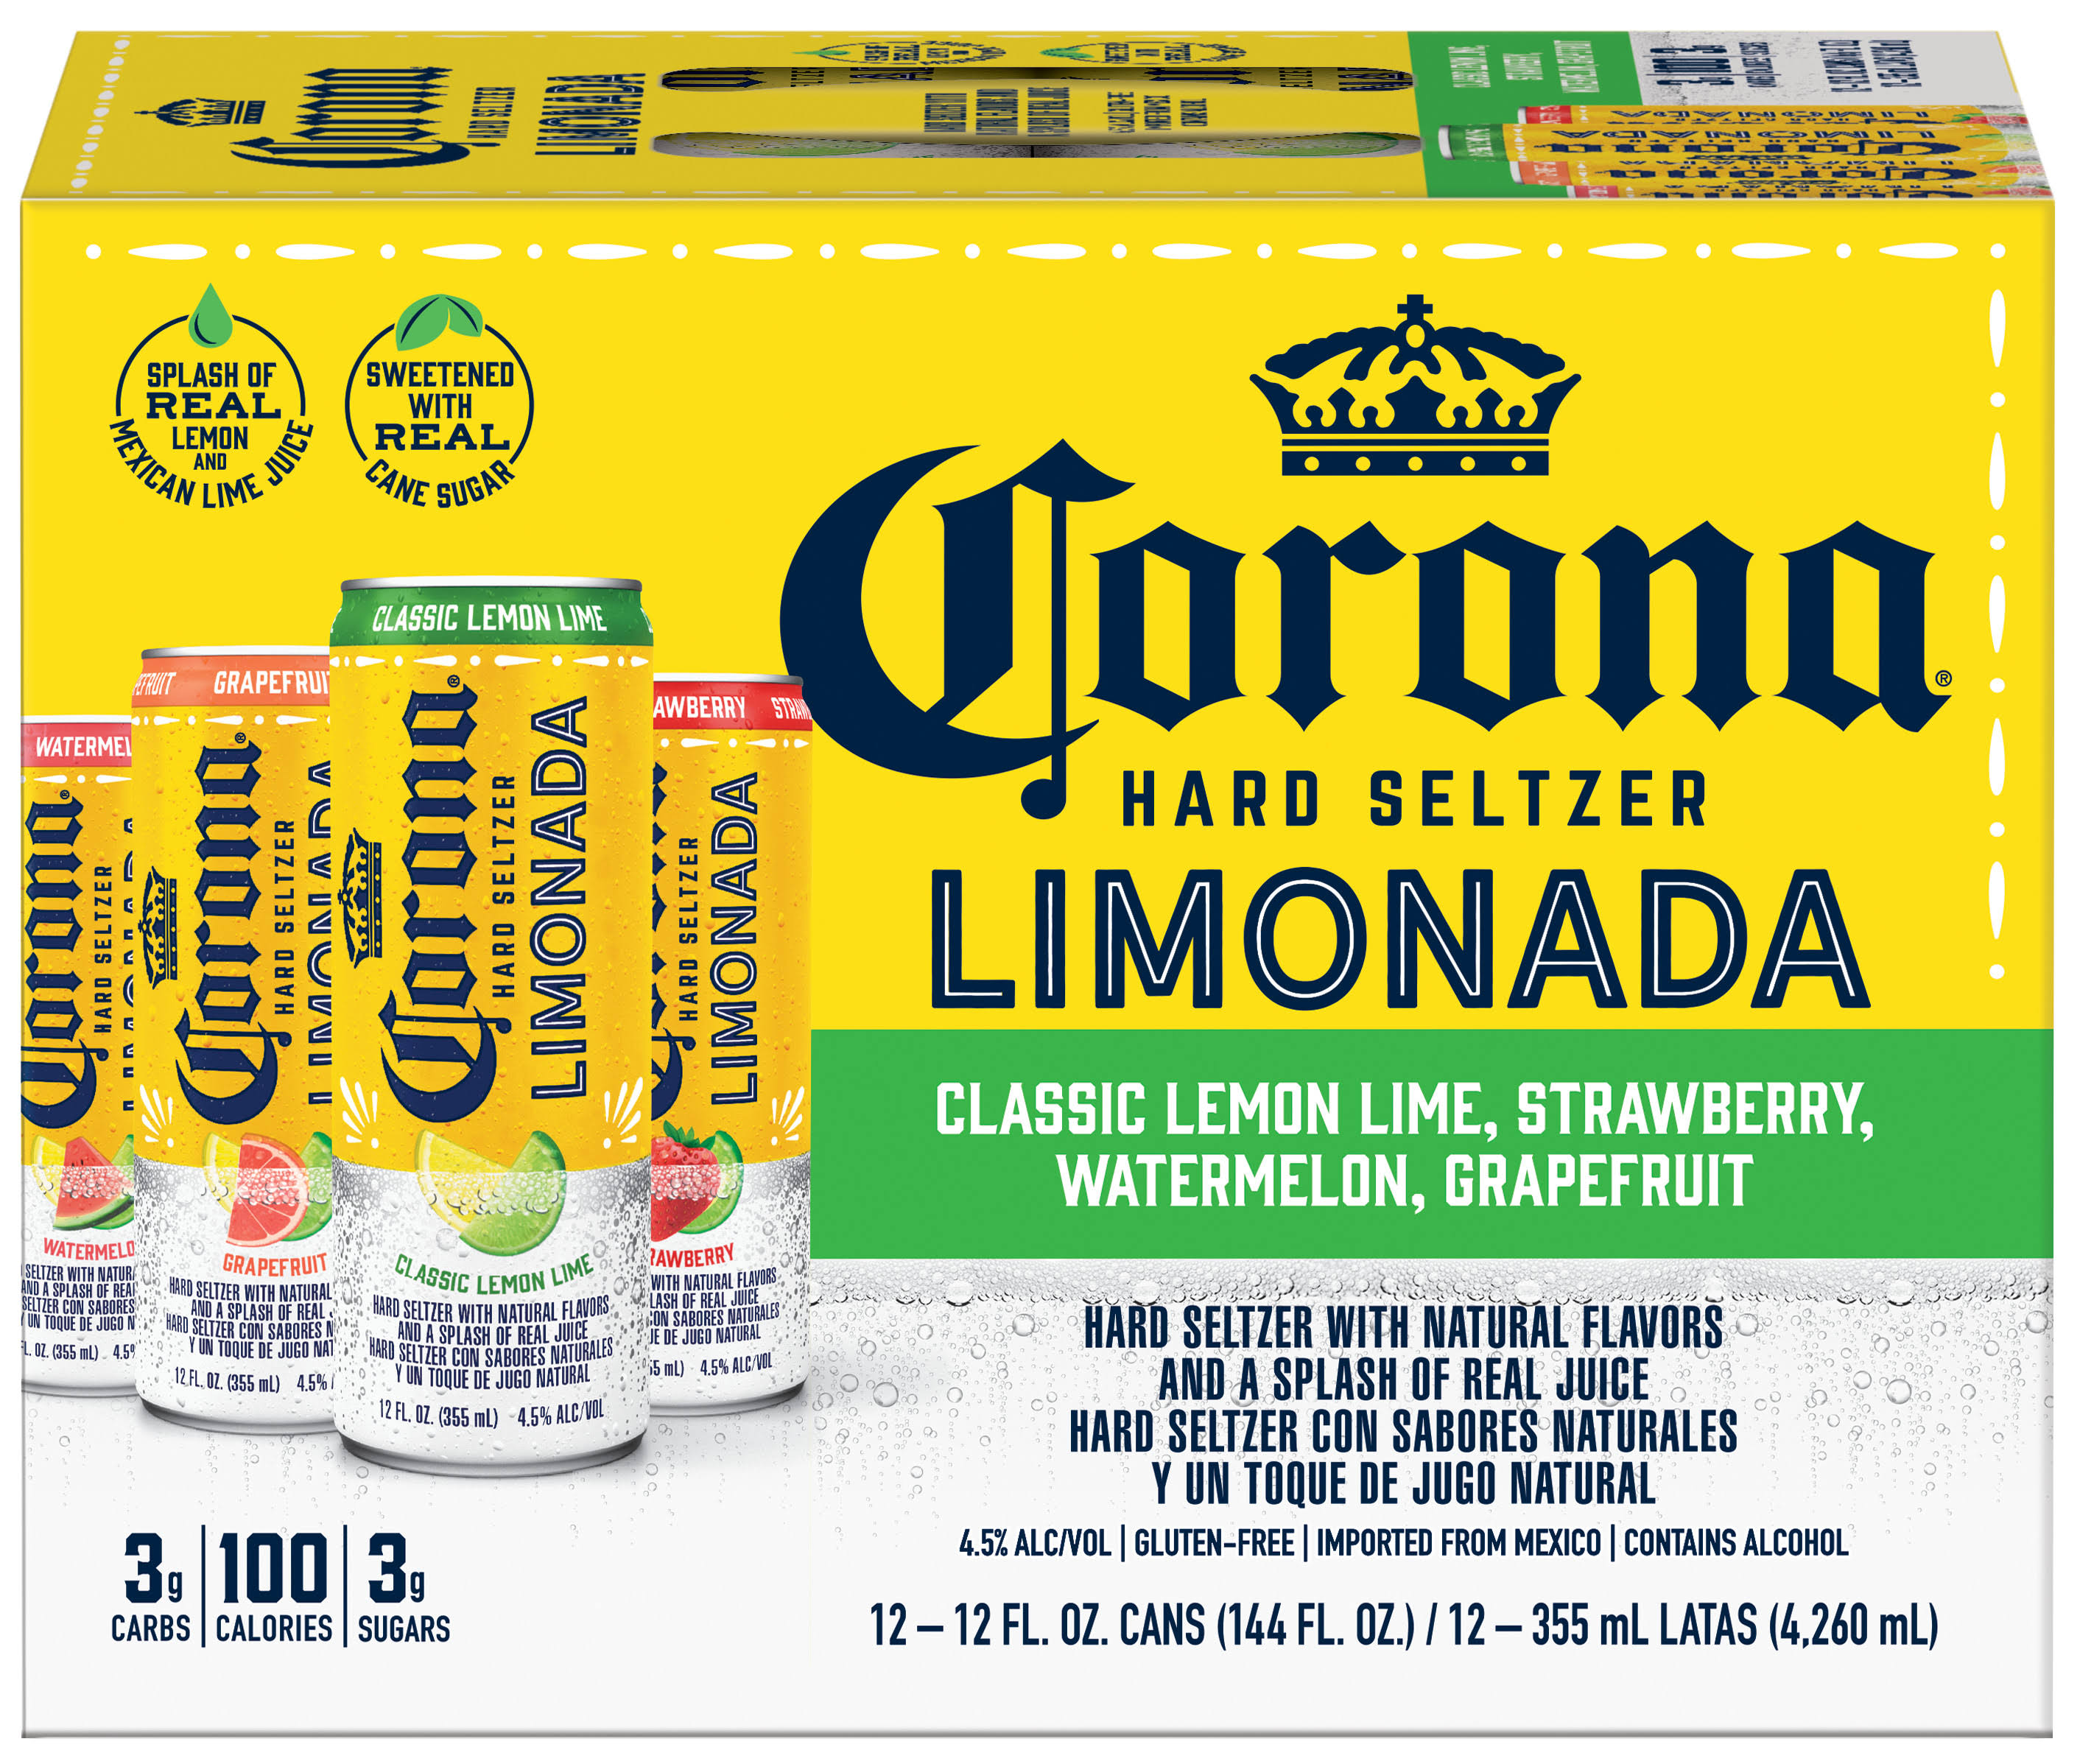 Corona Hard Seltzer, Limonada - 12 pack, 12 fl oz cans